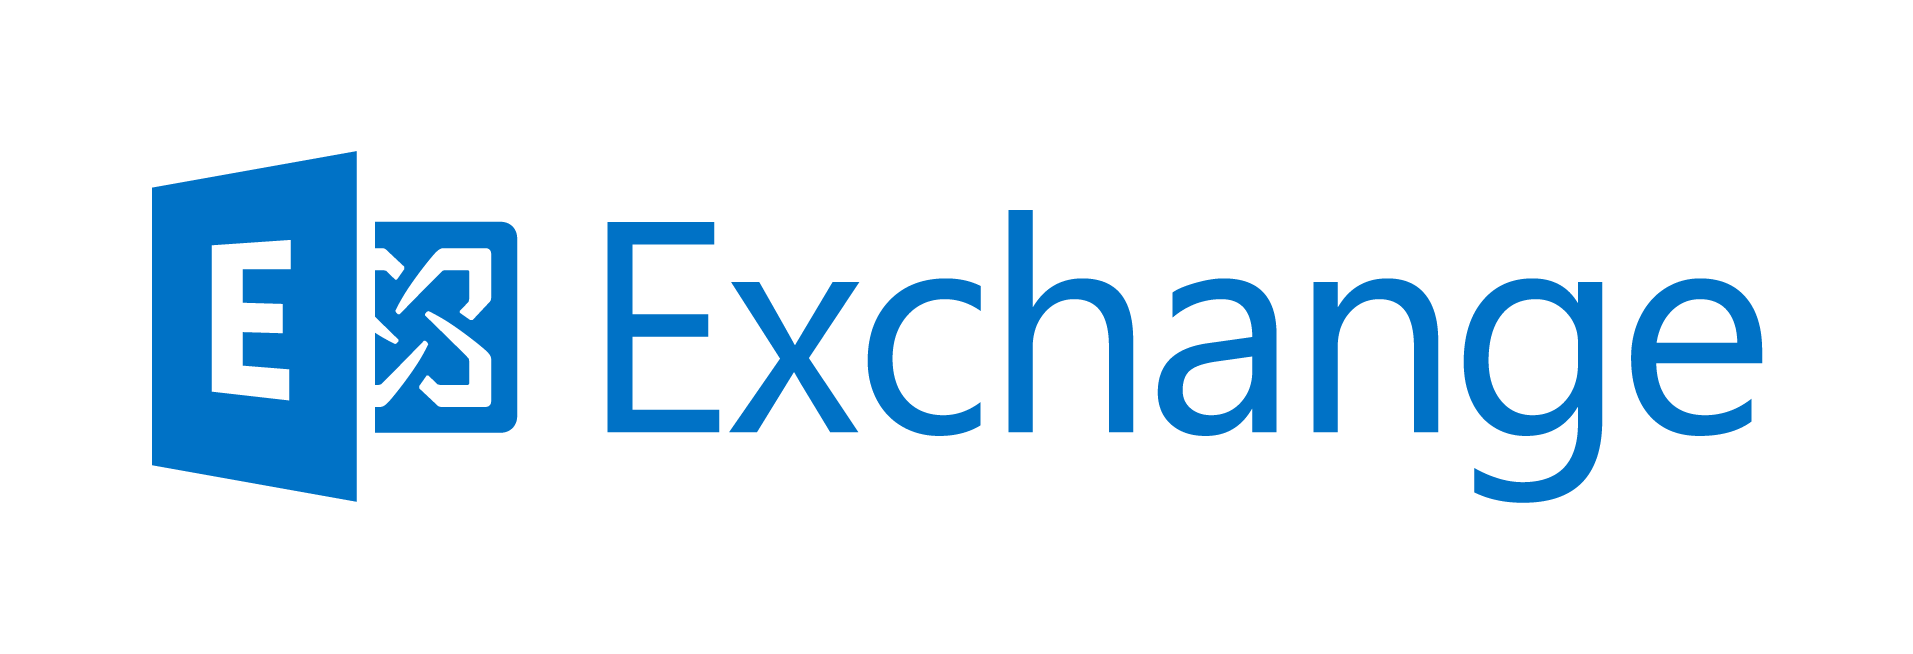 Microsoft-Exchange-2013.png